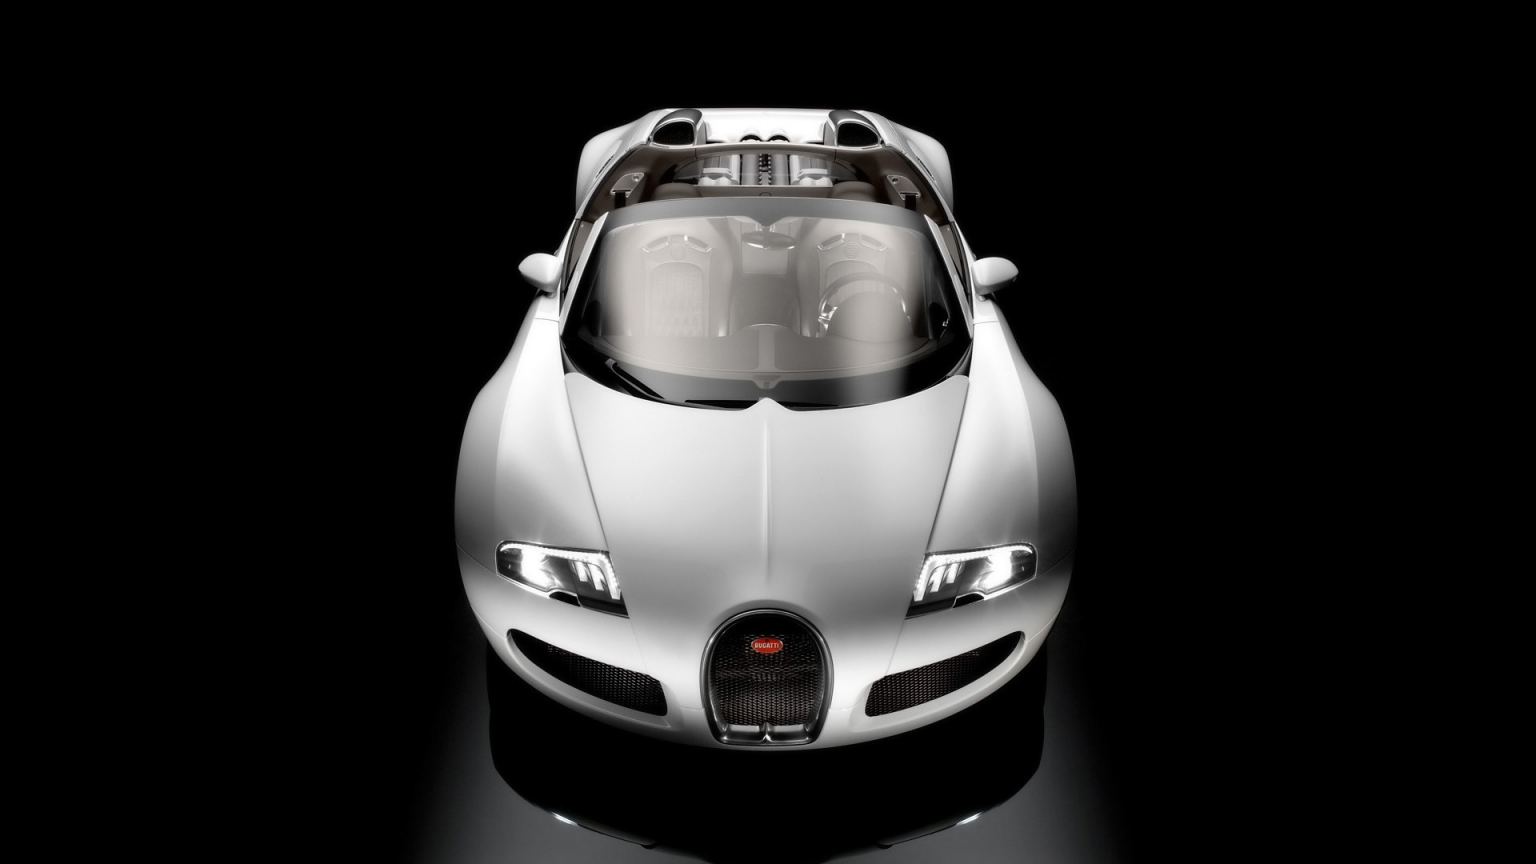 Bugatti Veyron 16.4 Grand Sport Production Version 2009 - Studio Front Top for 1536 x 864 HDTV resolution